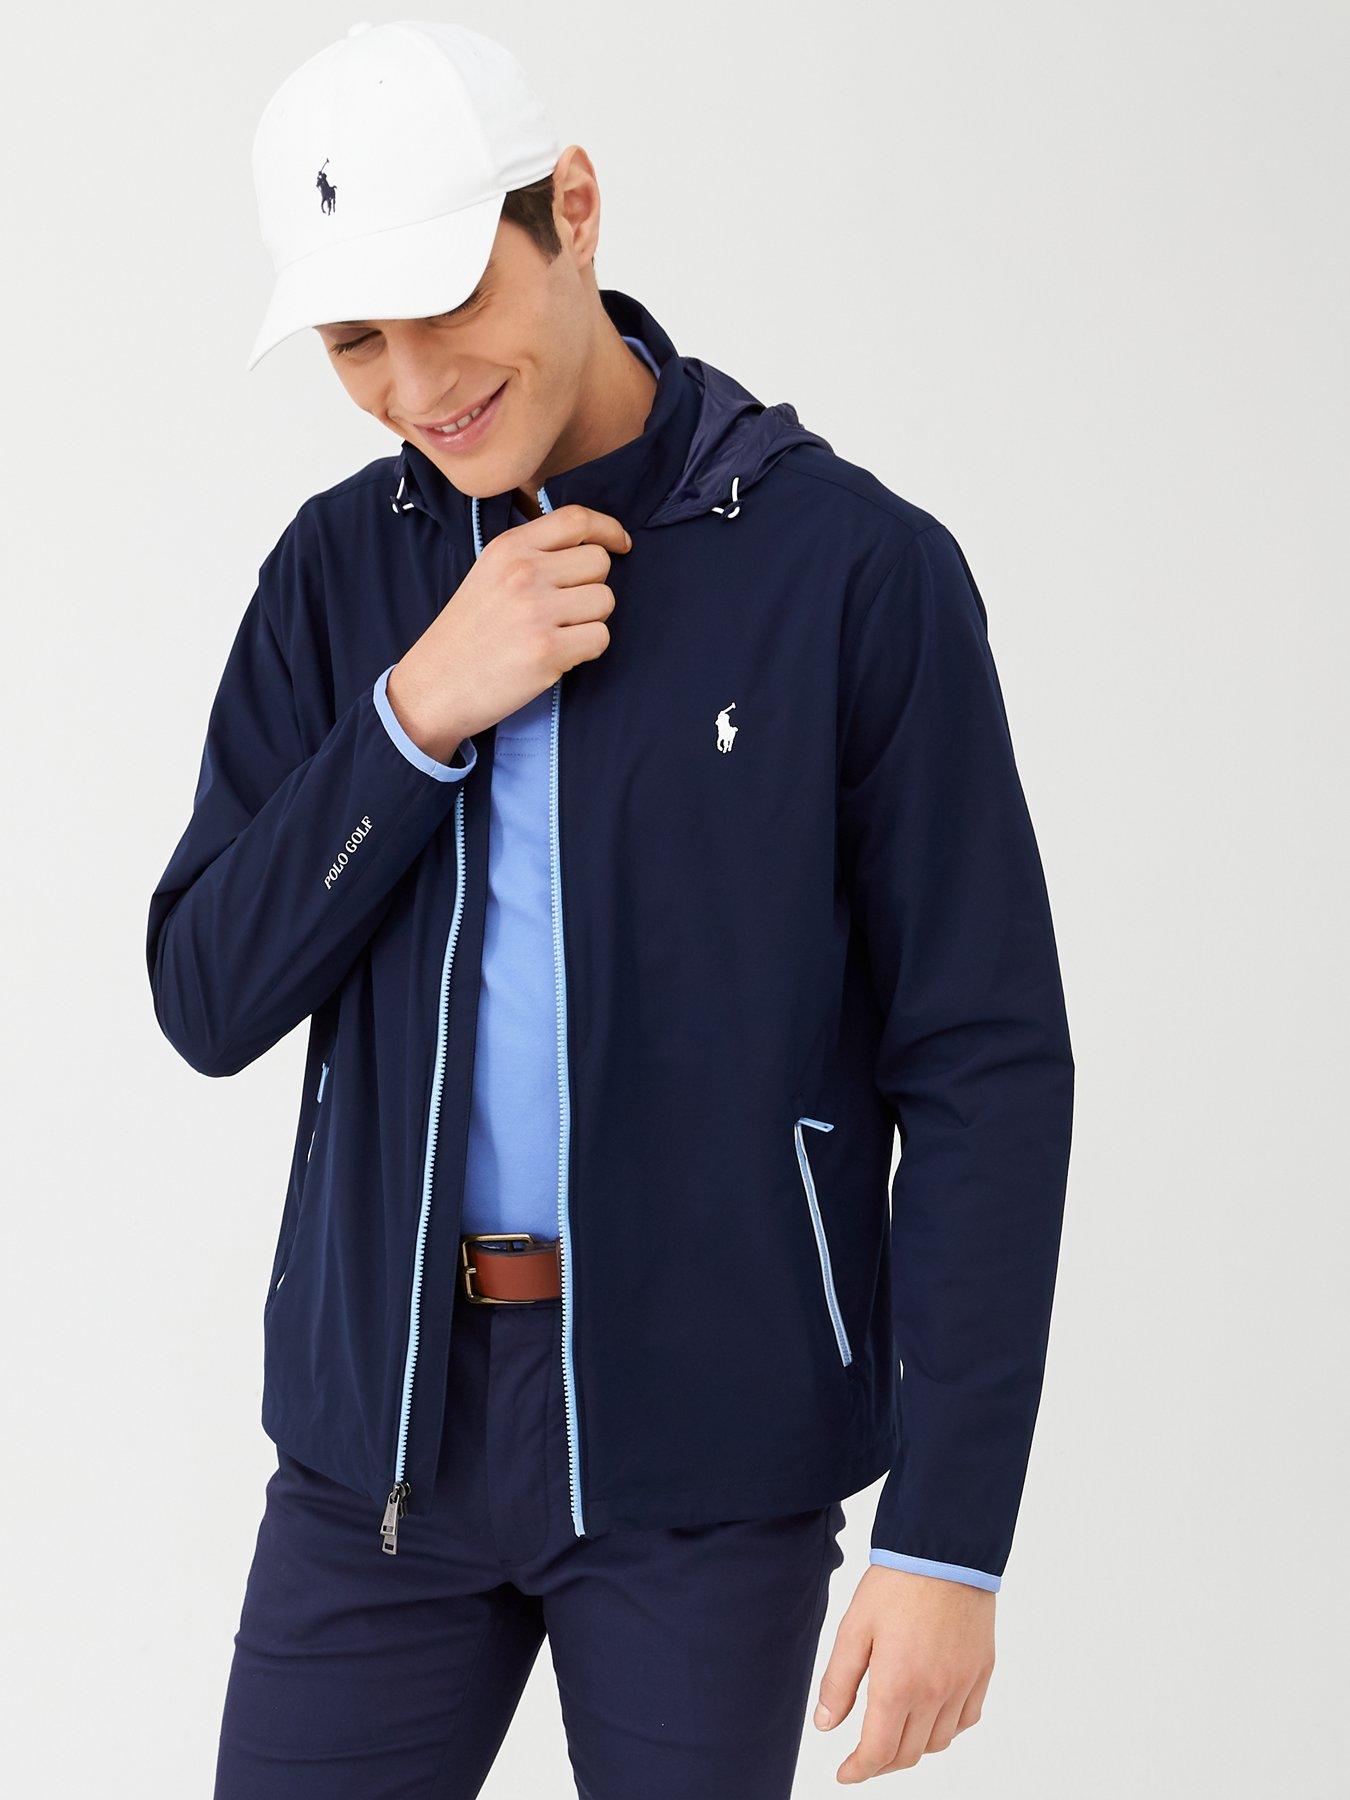 polo golf ralph lauren windbreaker jacket